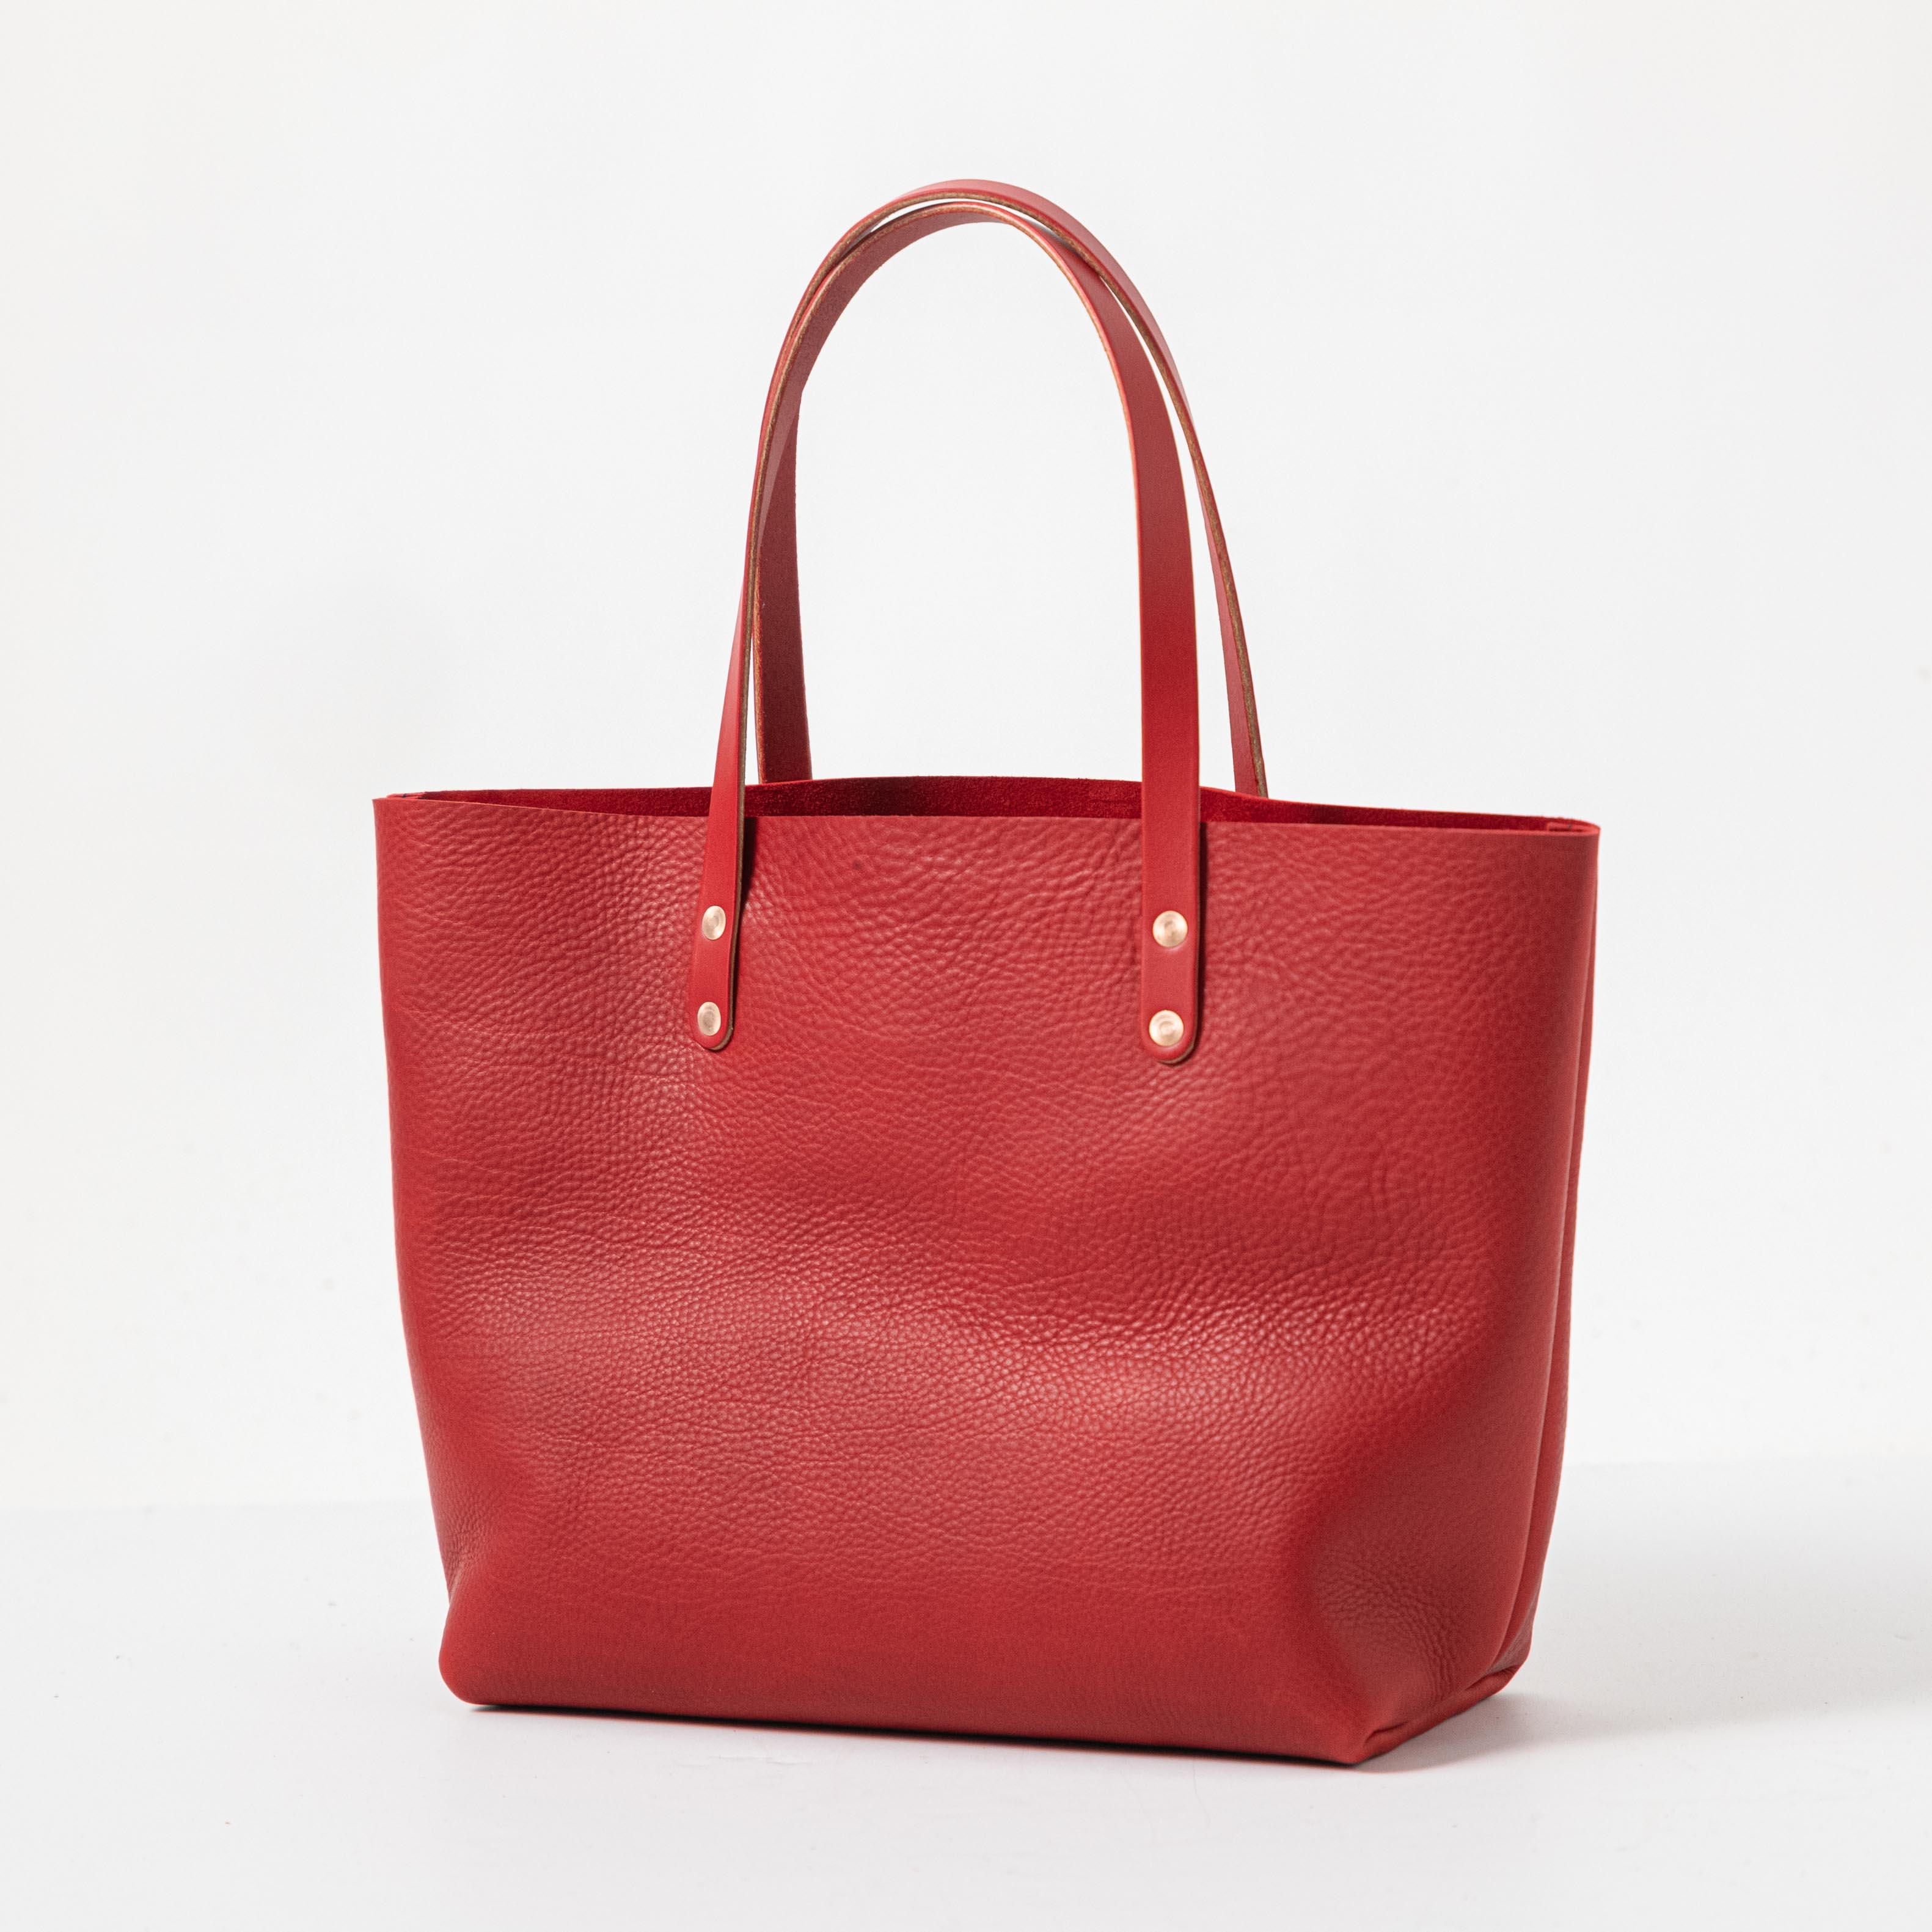 Fiore Genuine Leather Hobo Tote Handbag Purse Made in Italy New W/Tag  D.14X5X15 | eBay